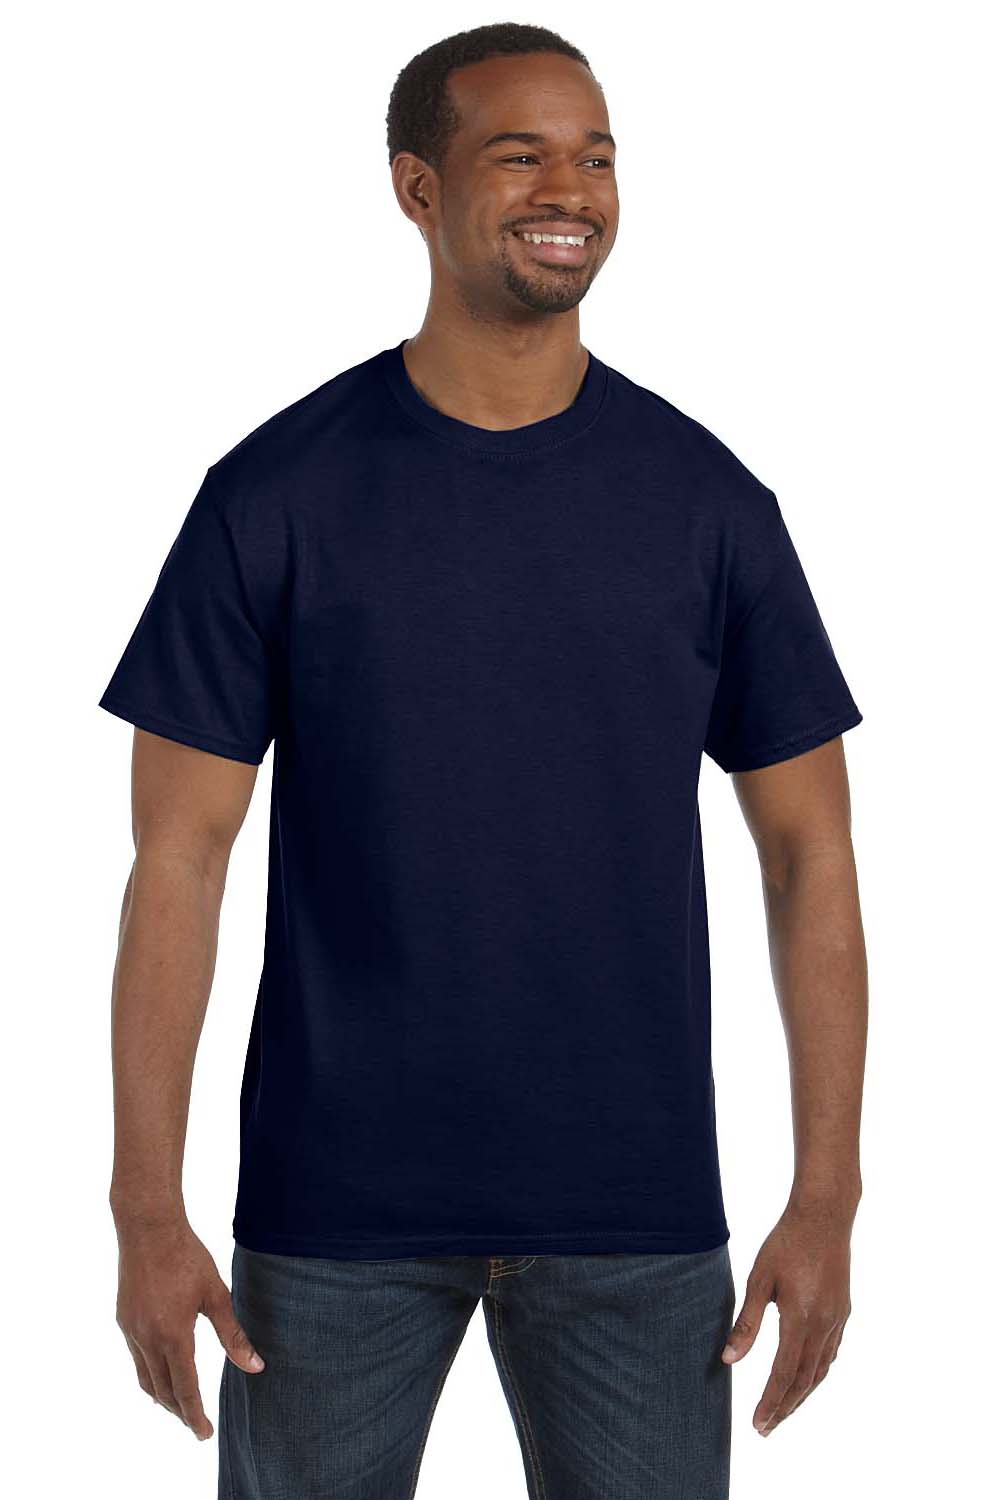 Hanes 5250T Mens ComfortSoft Short Sleeve Crewneck T-Shirt Navy Blue Front